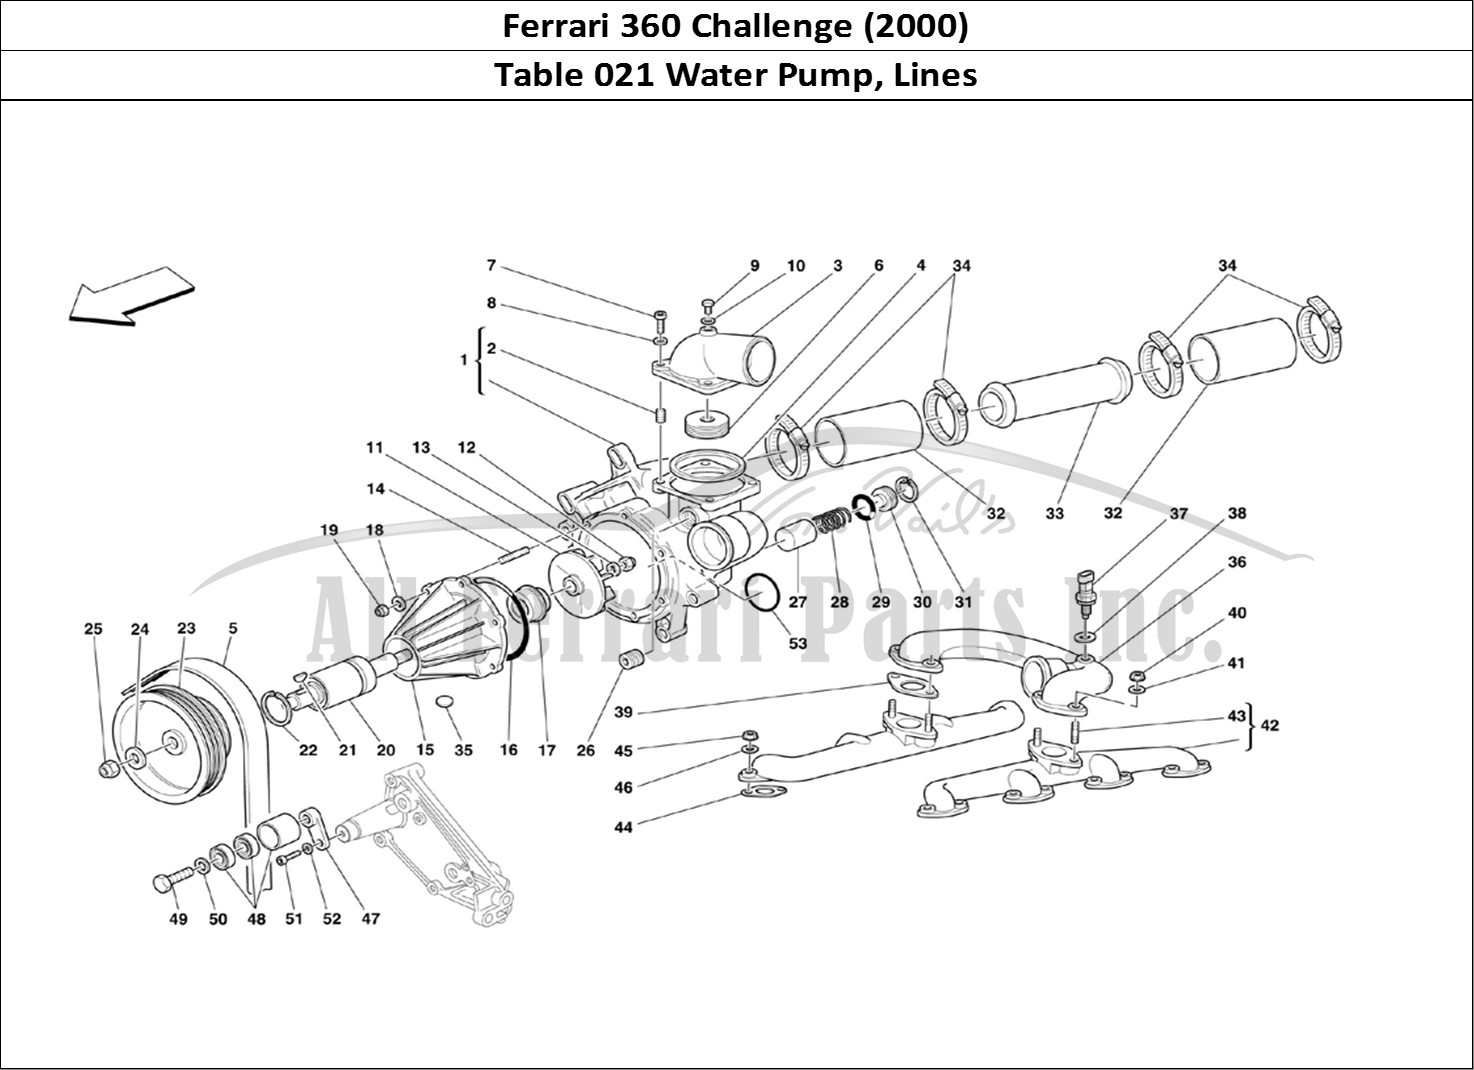 Ferrari Parts Ferrari 360 Challenge (2000) Page 021 Water Pump